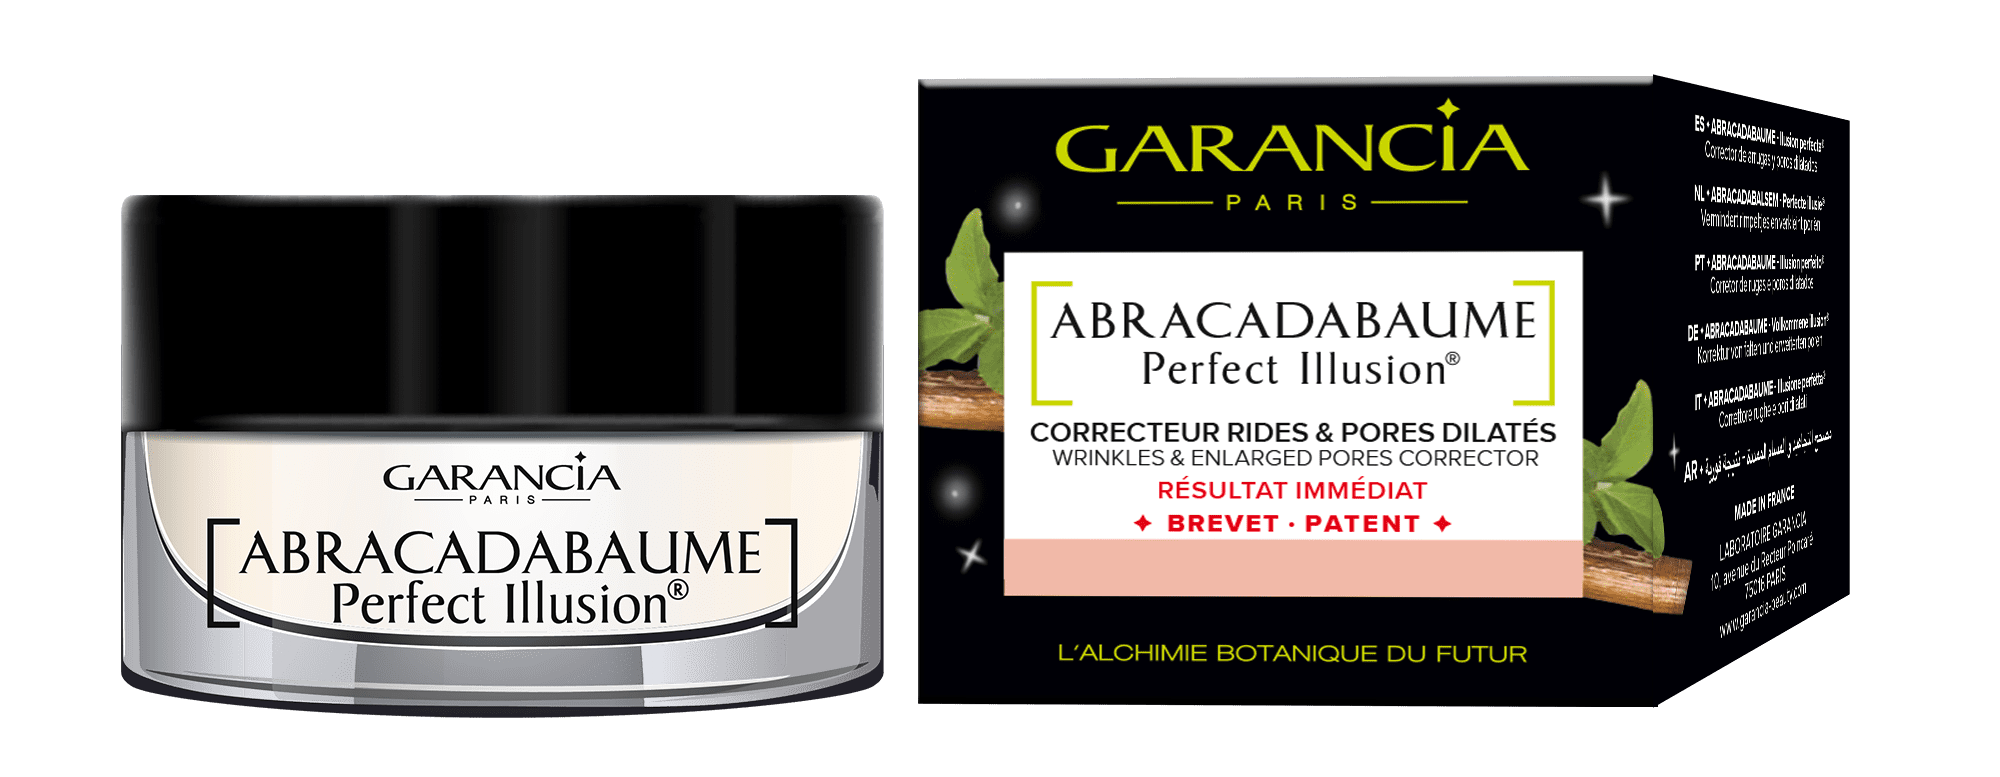 Abracadabaume Perfect Illusion rides et pores dilatés Garancia - pot 12 g